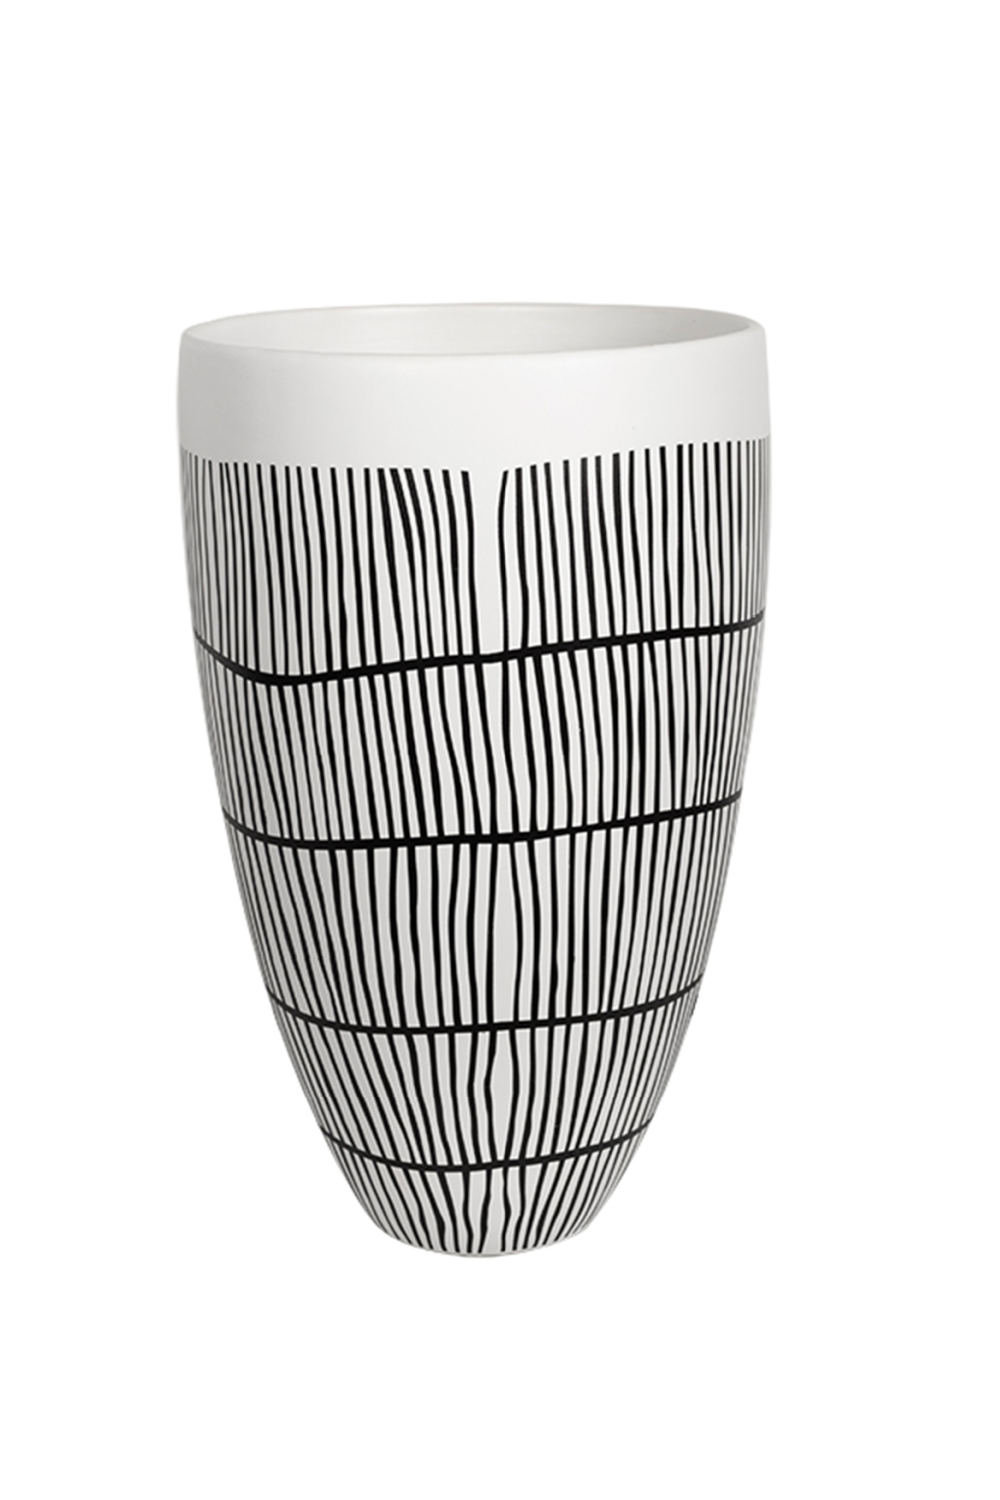 Handpainted Black Line Ceramic Vase | Liang & Eimil Birch II | Oroa.com